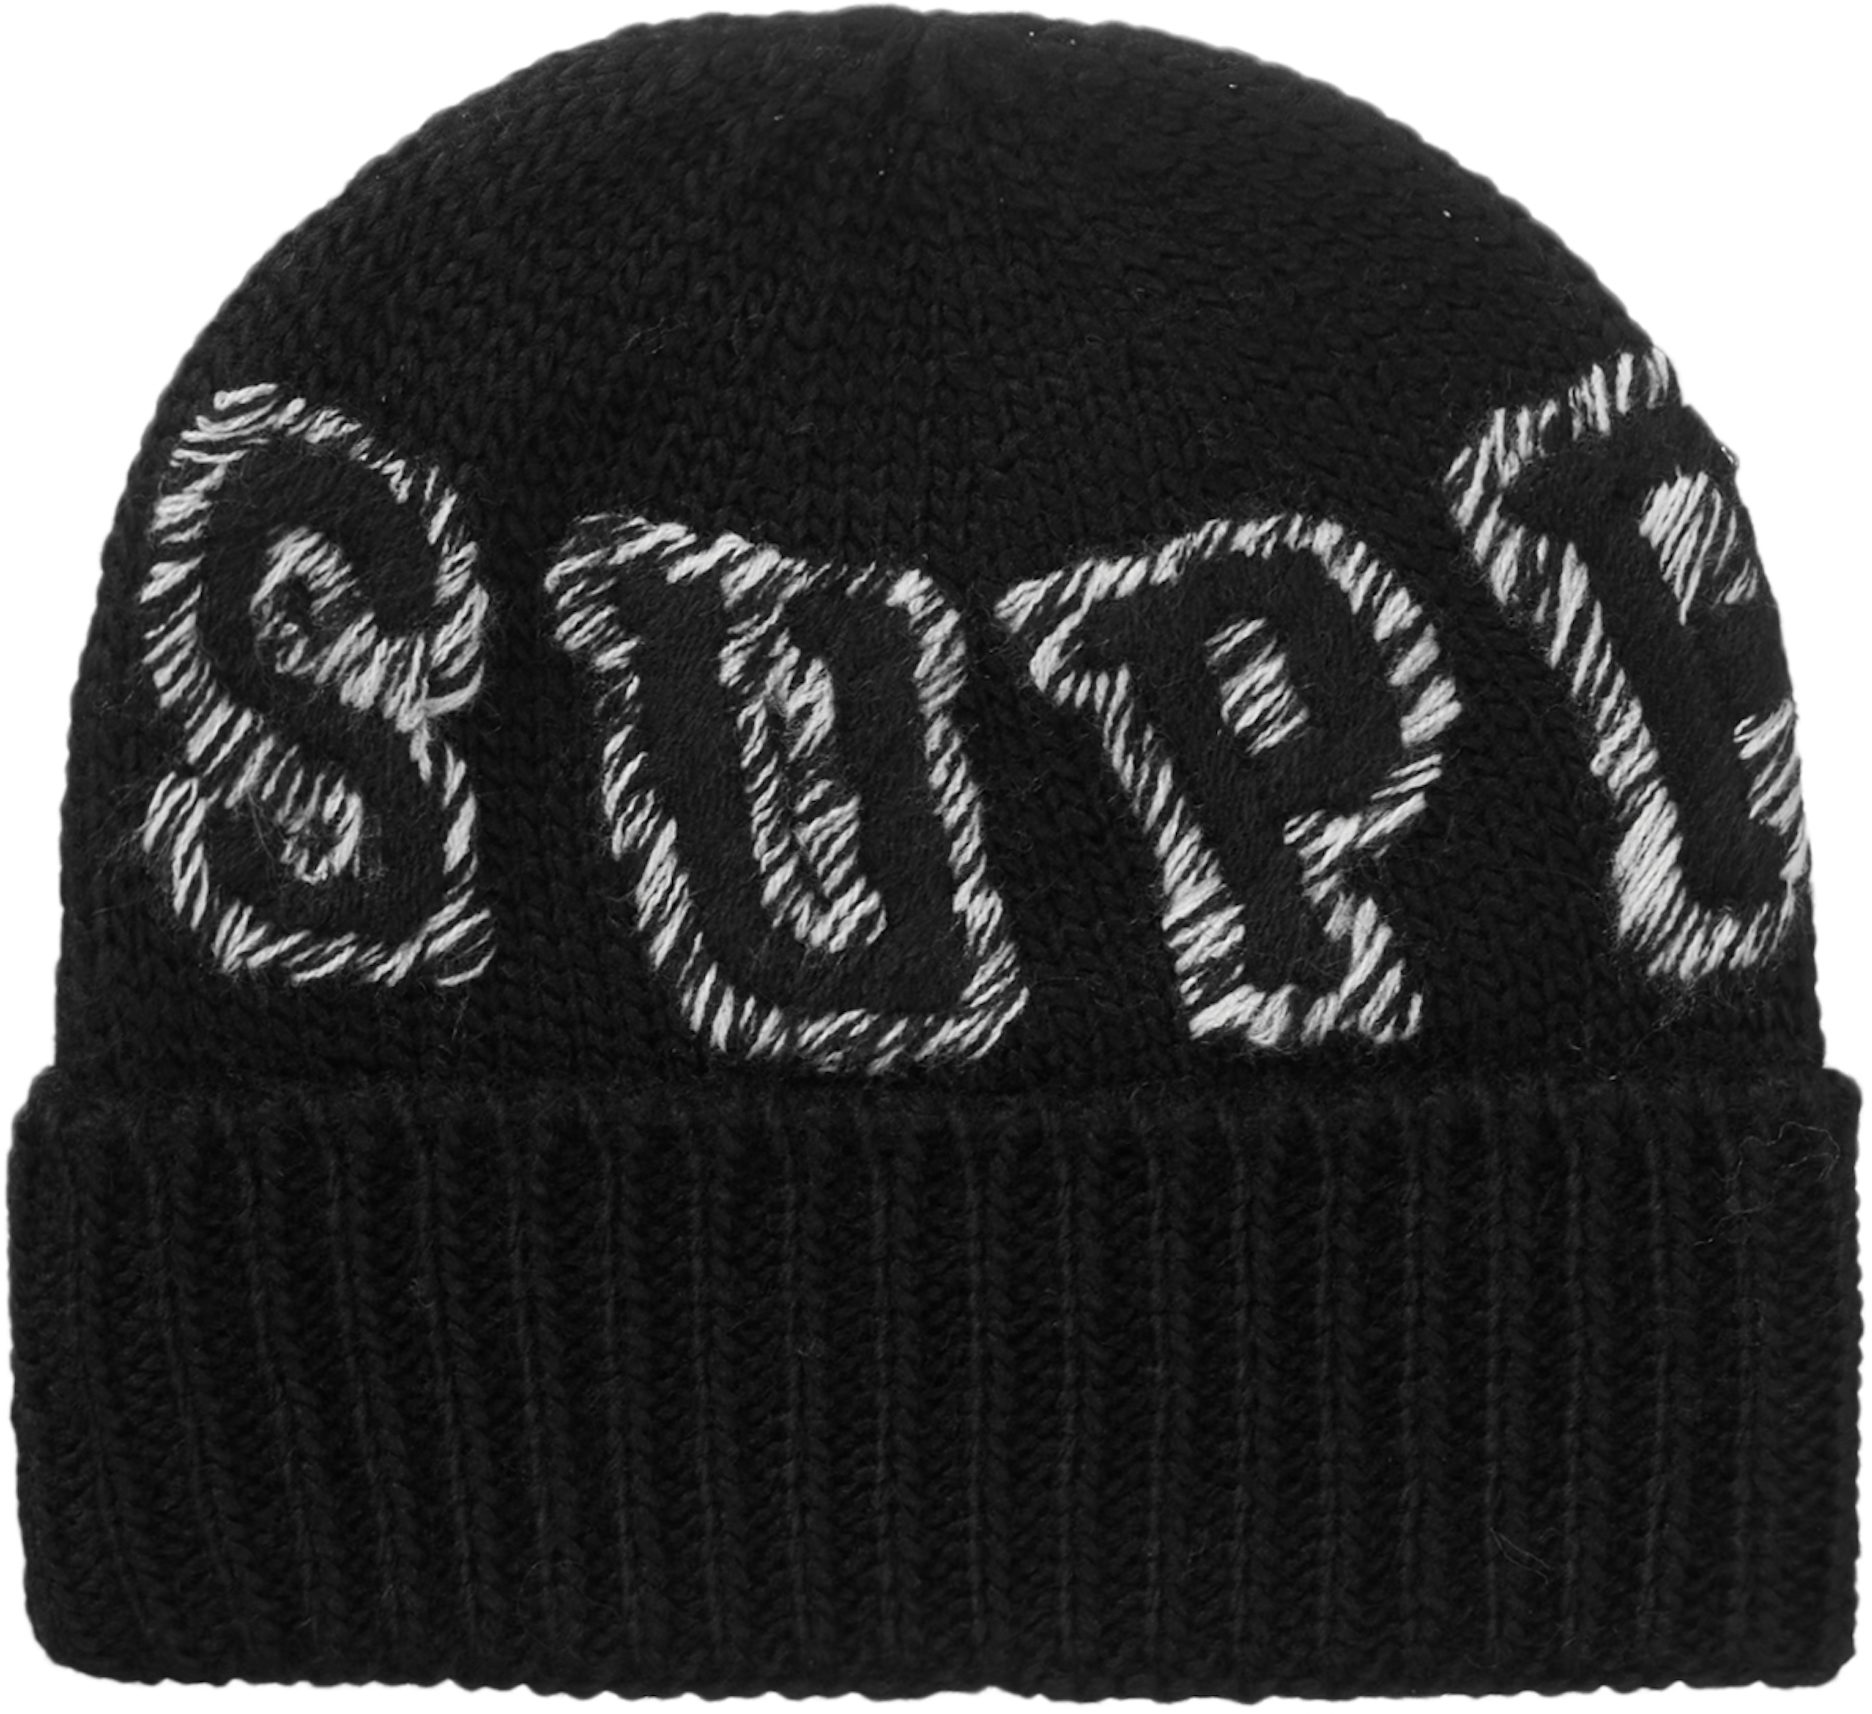 Supreme RARE THE OG 2000s SUPREME X LV Monogram Bucket Hat